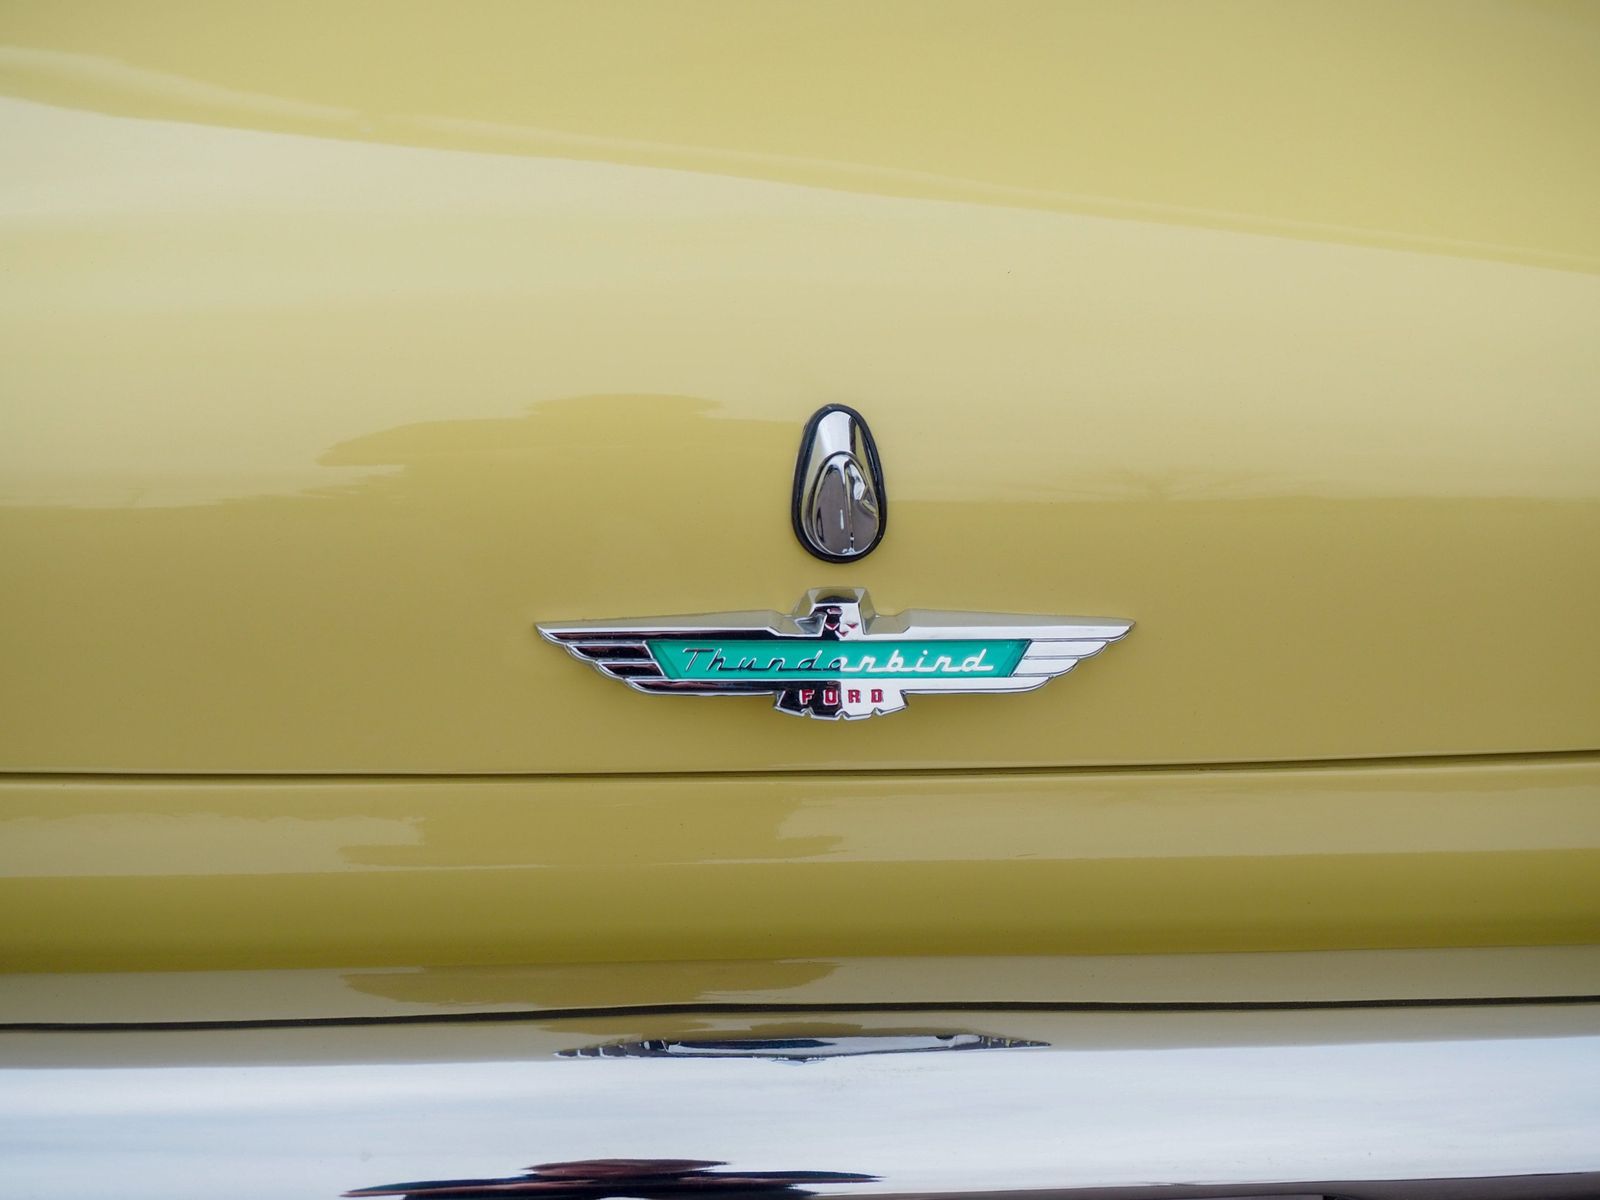 1957 Ford Thunderbird 30